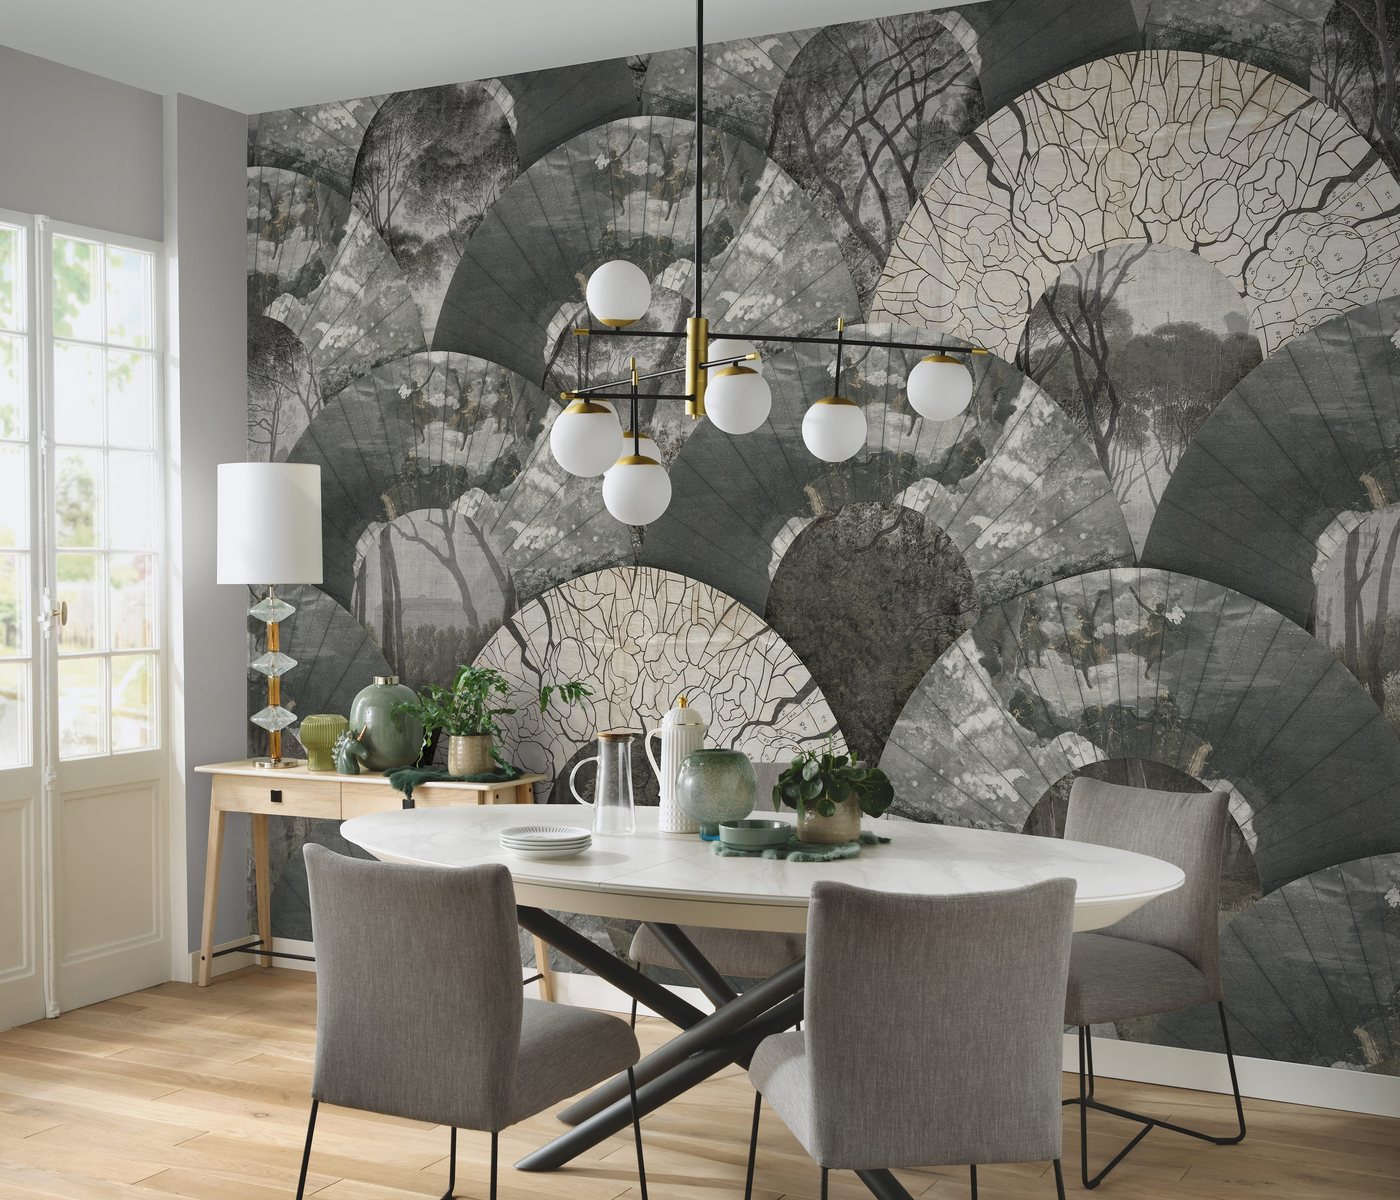 Newroom Vliestapete, [ 4,5 x 2,7 m ] großzügiges Motiv - kein wiederkehrendes Muster - Fototapete Wandbild Halbkreise Baumstämme Bäume Made in Germany von Newroom